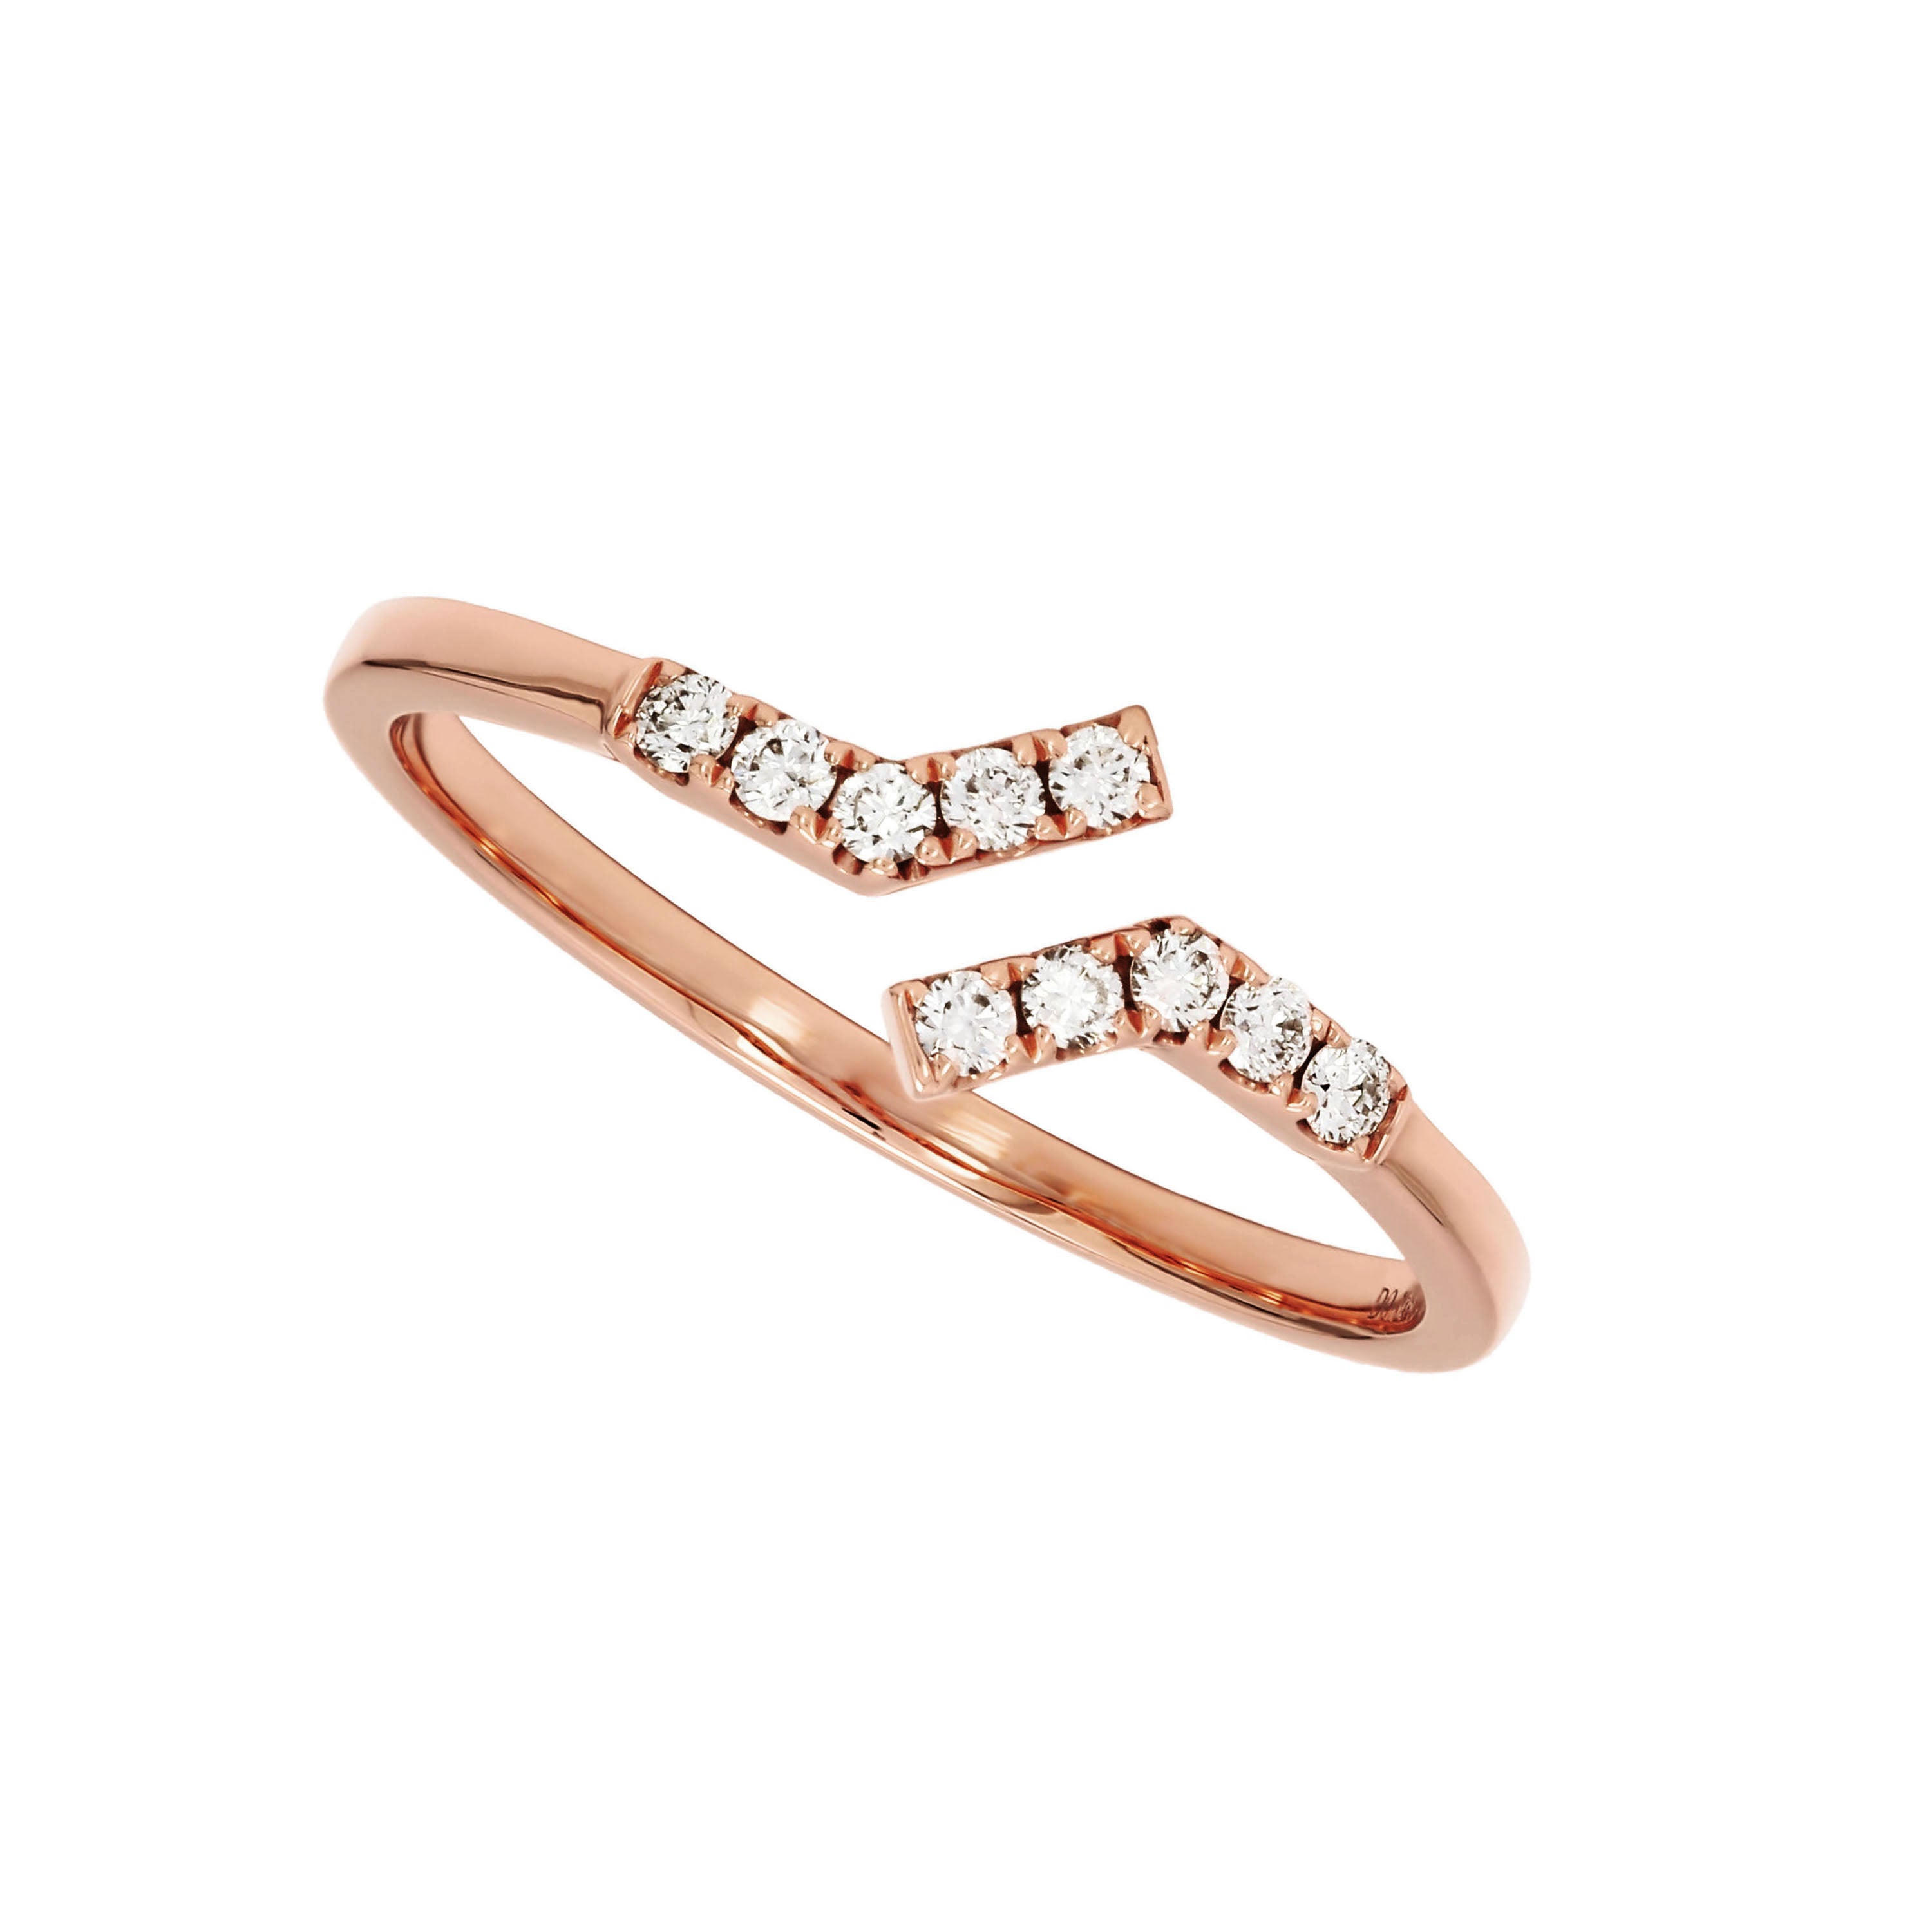 Adamar Jewels Beam Ring in 18K rose gold set with diamonds